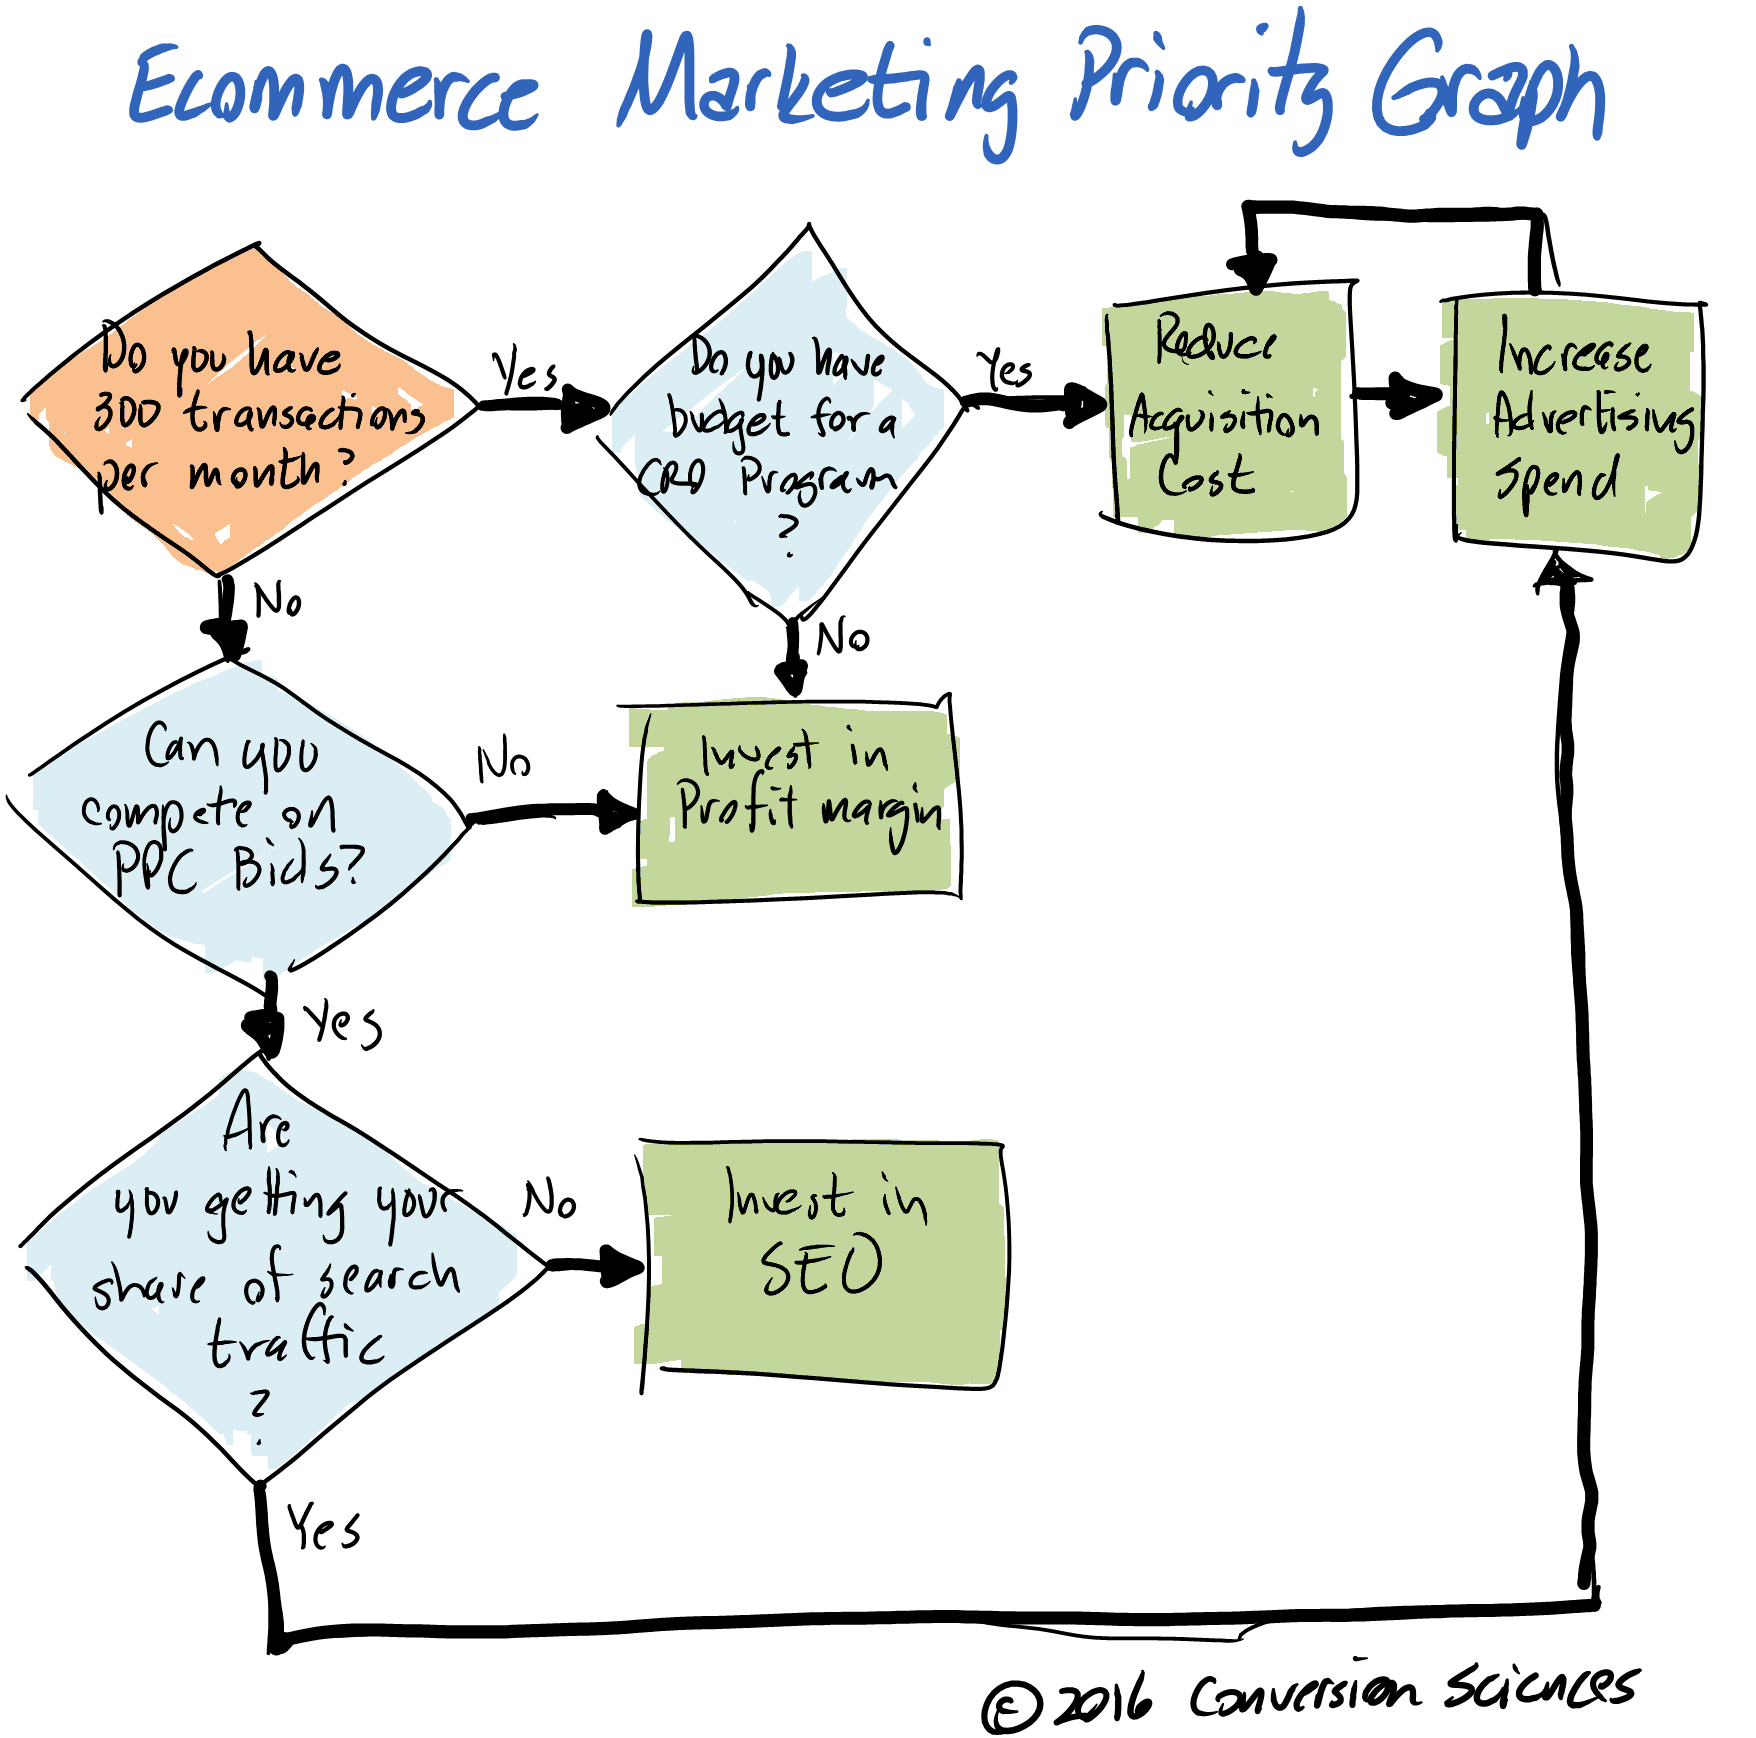 grow ecommerce revenue priority graph conversionsci 